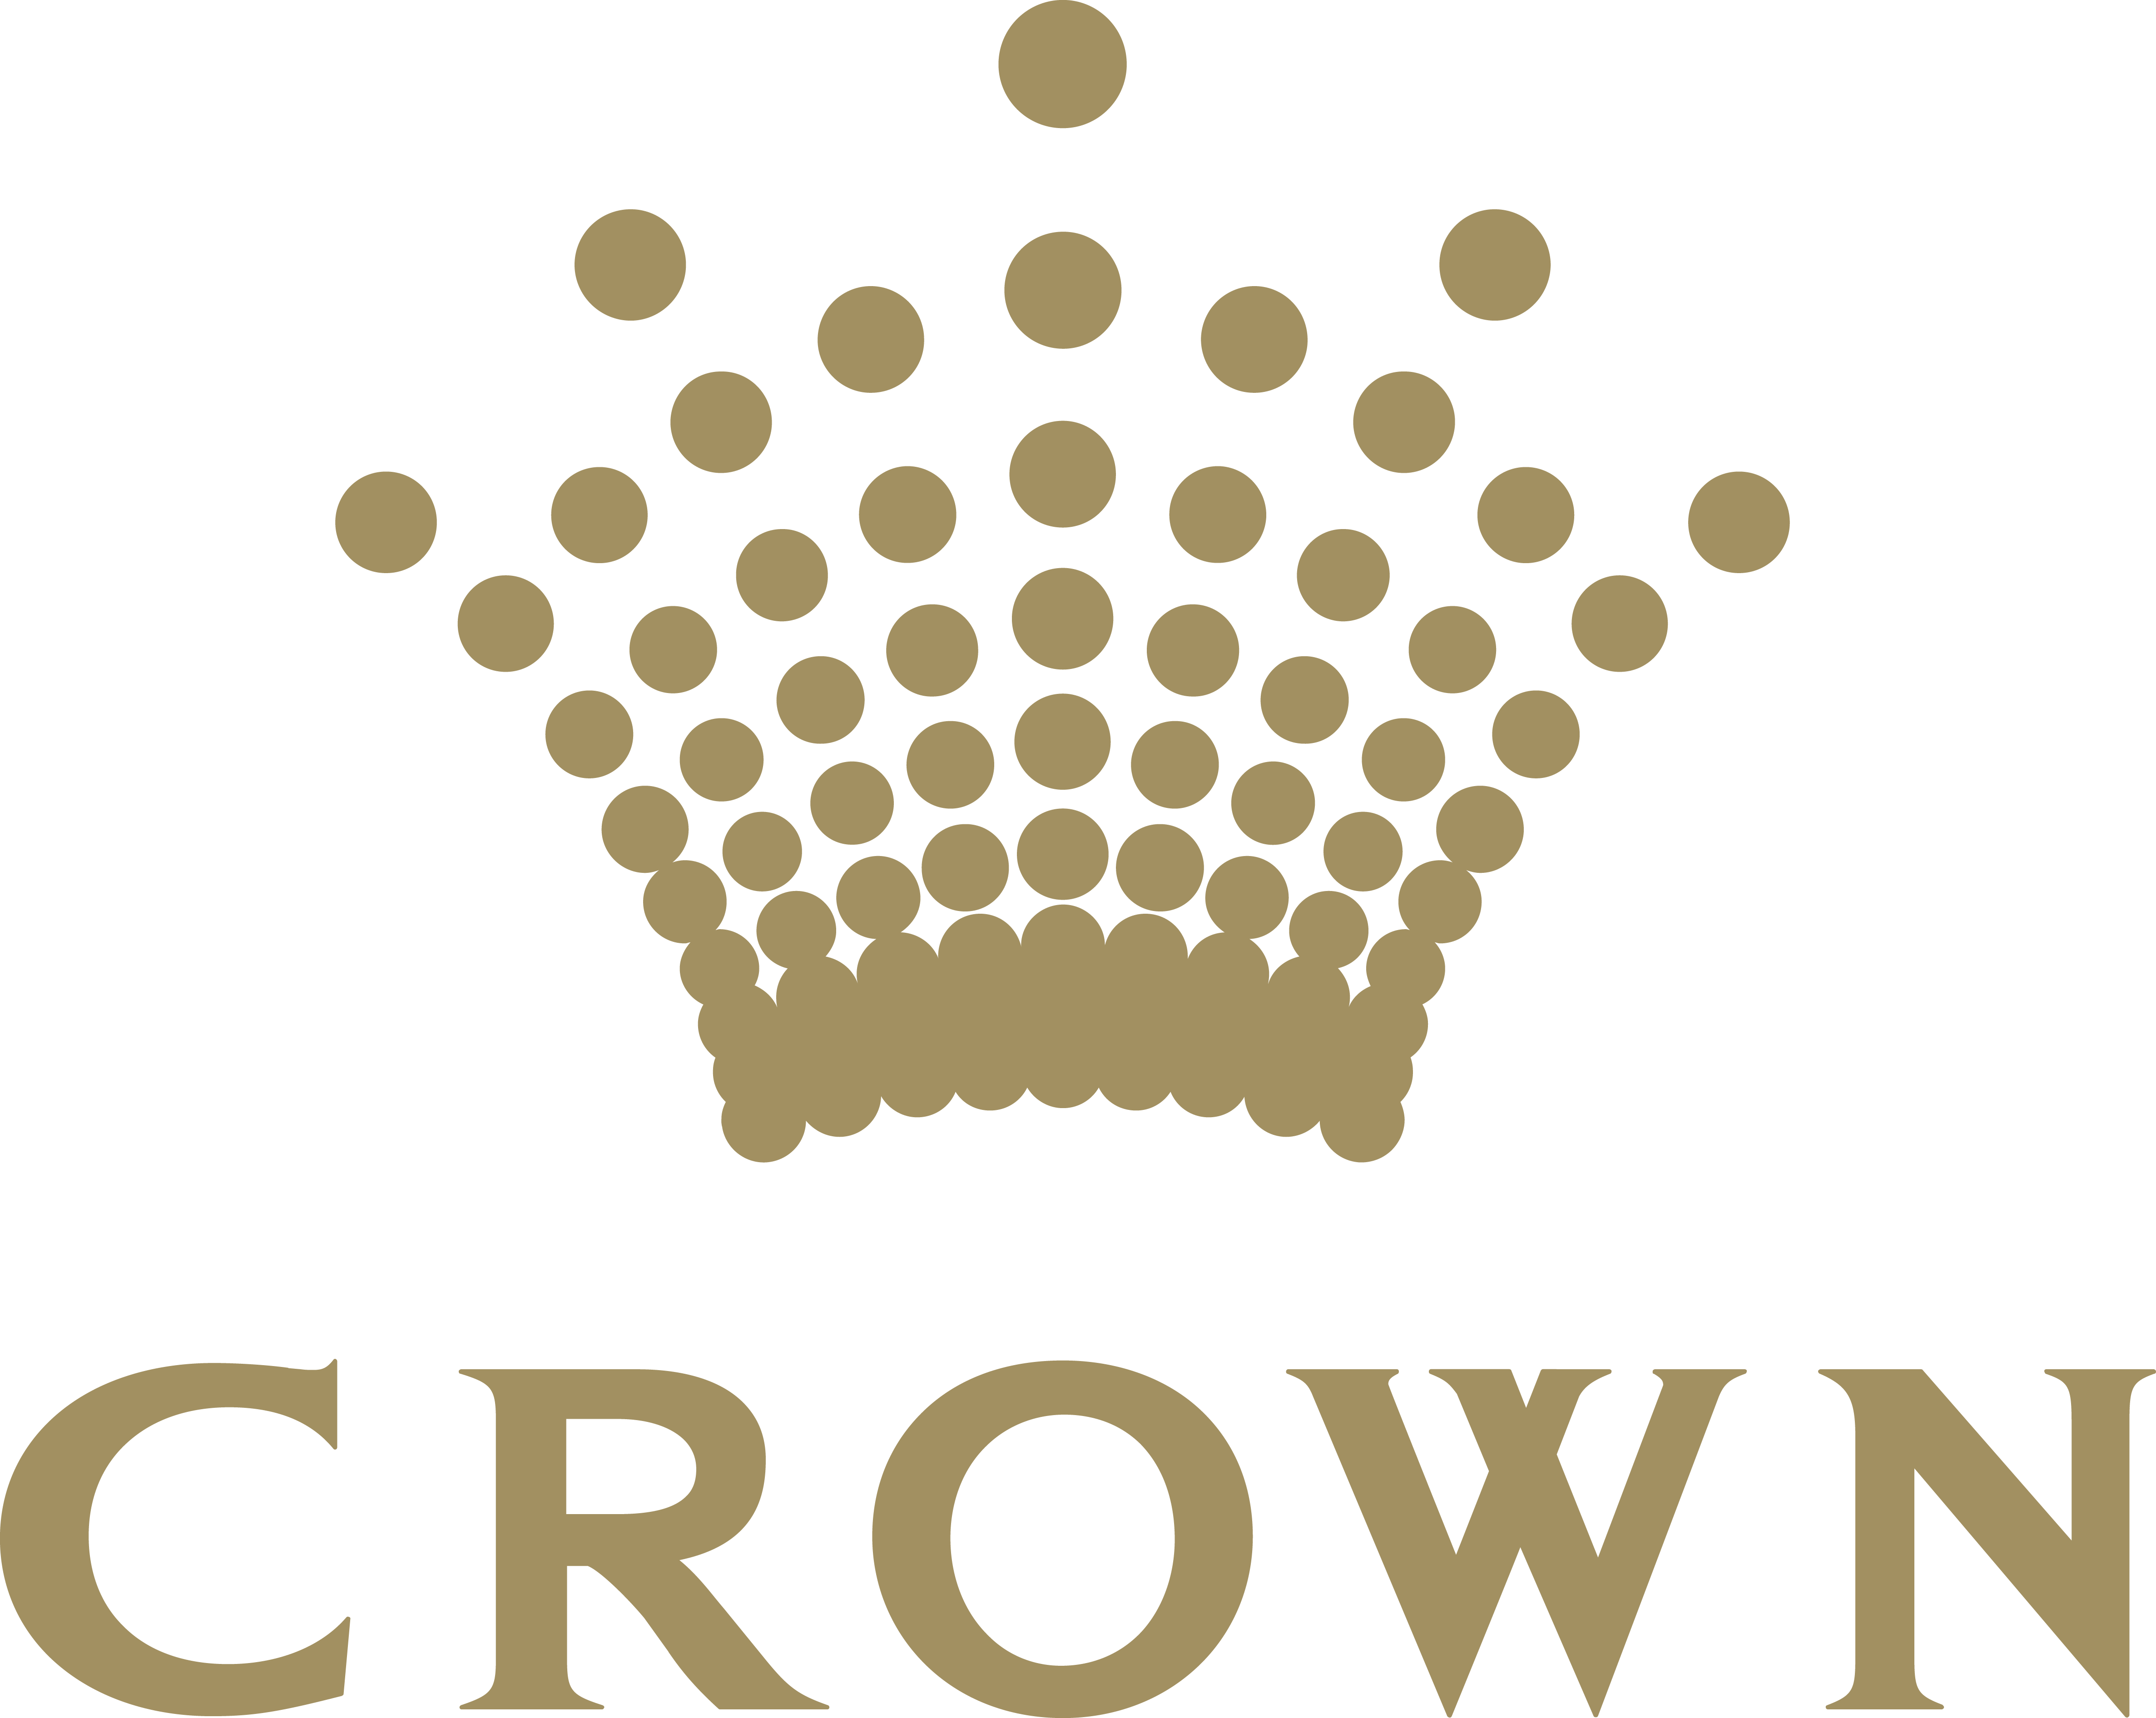 Black and Gold Crown Logo - 19 Transparent crowns logos for free download on YA-webdesign